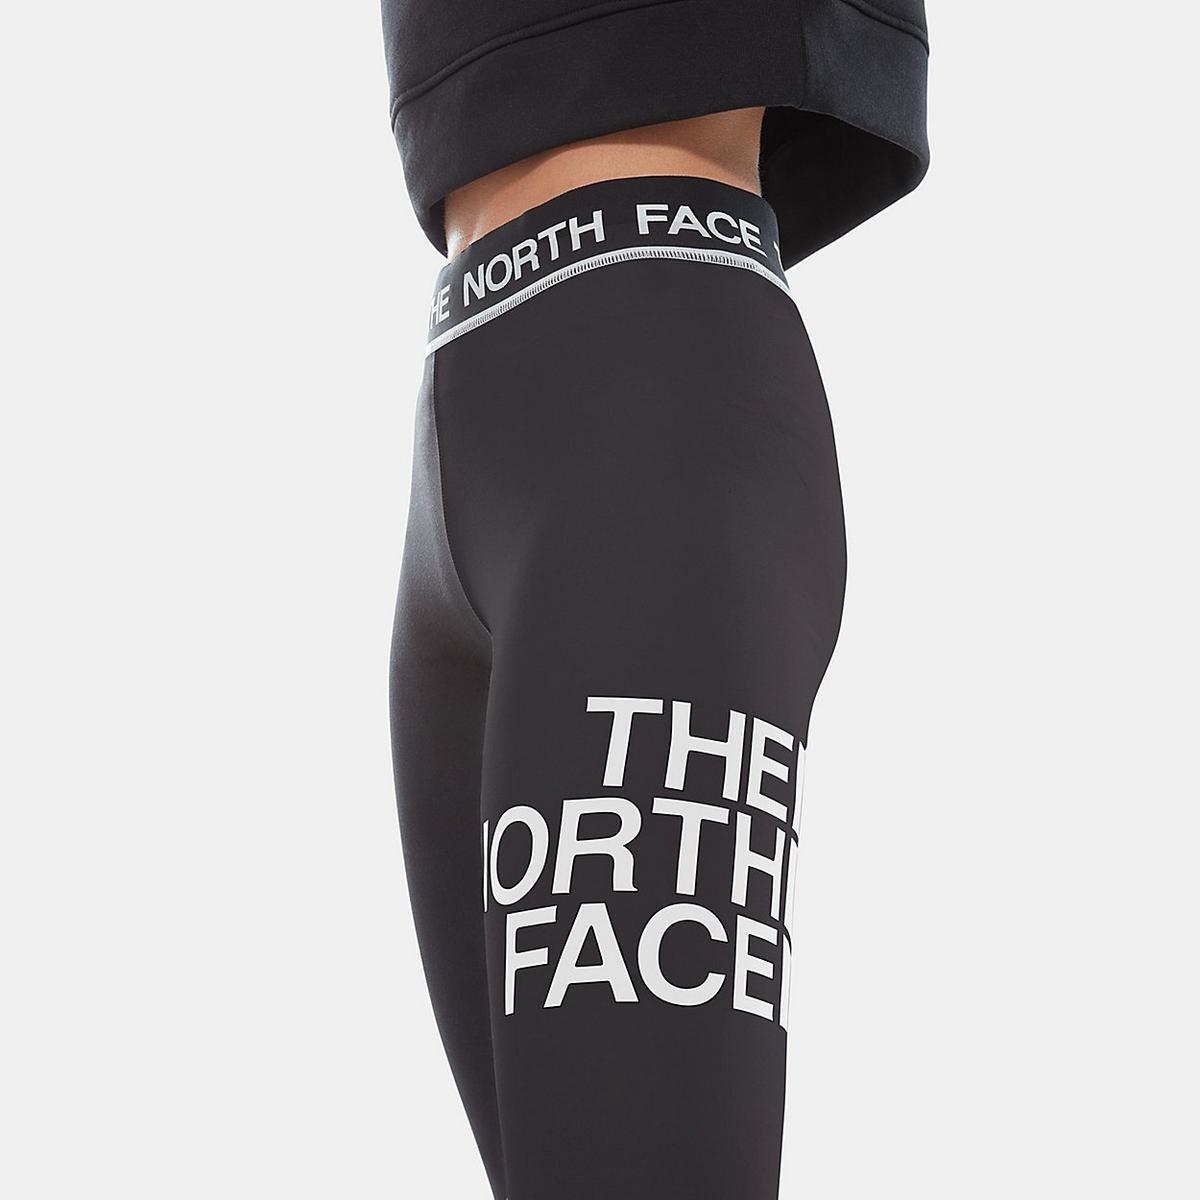 The North Face Leggings Women's XS Black Flex Tight Graphic Never